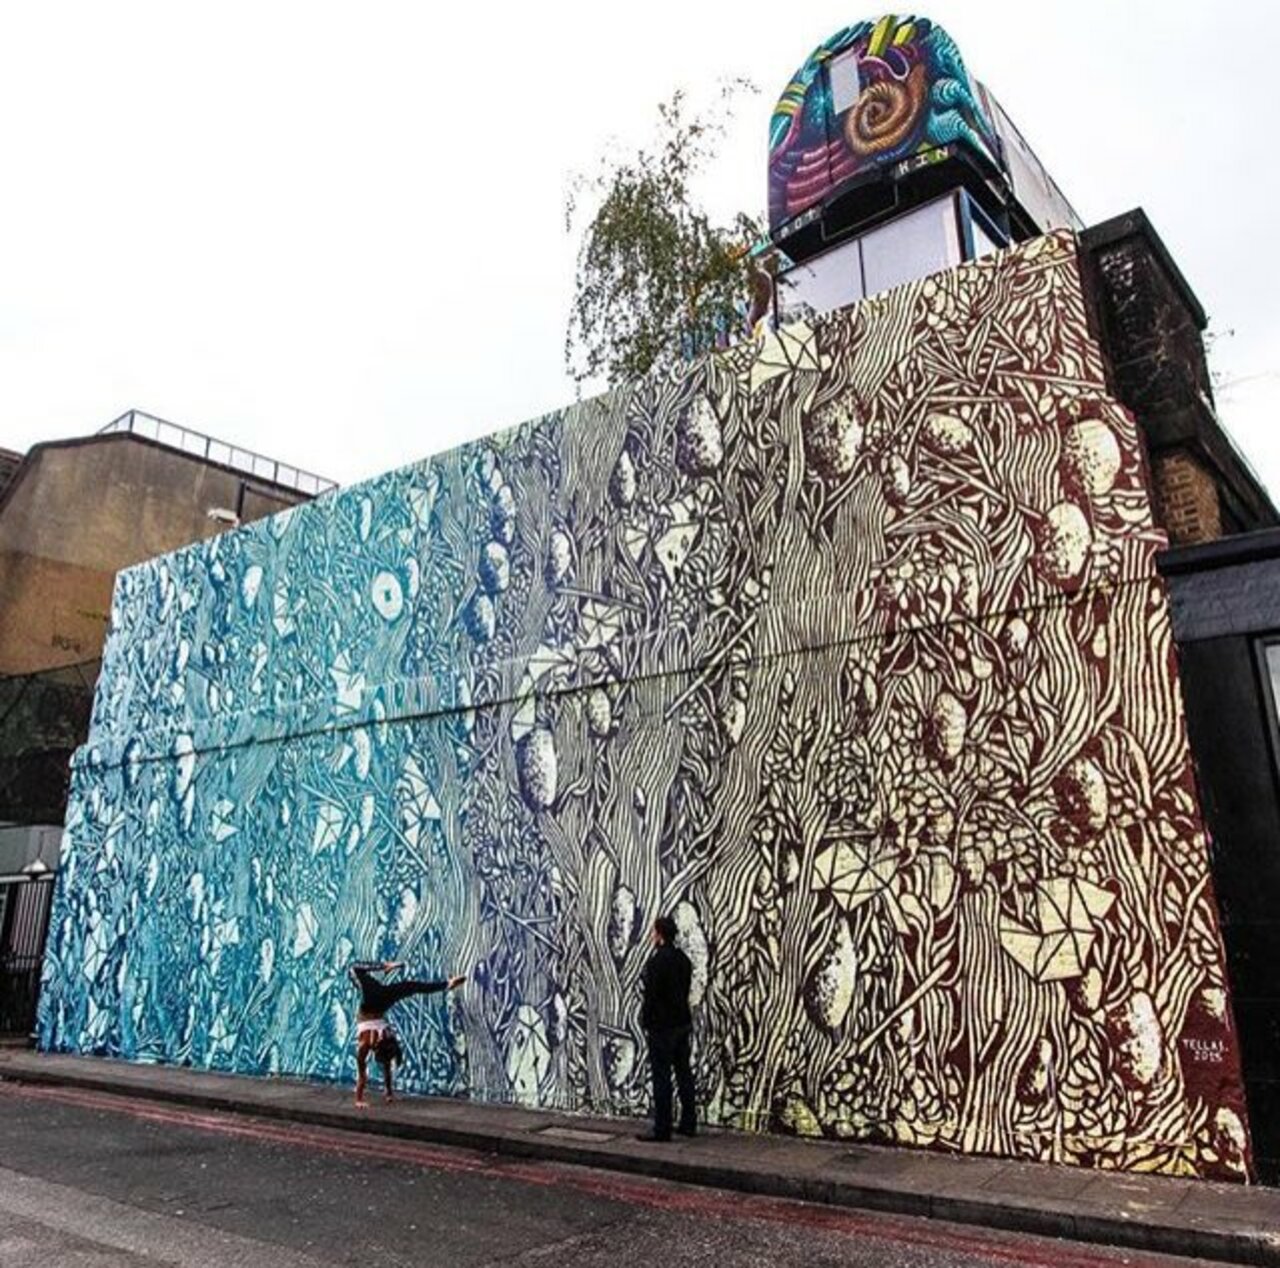 New Street Art by Tellas in Shoreditch London 

#art #graffiti #mural #streetart https://t.co/Br2I1ZUR8B